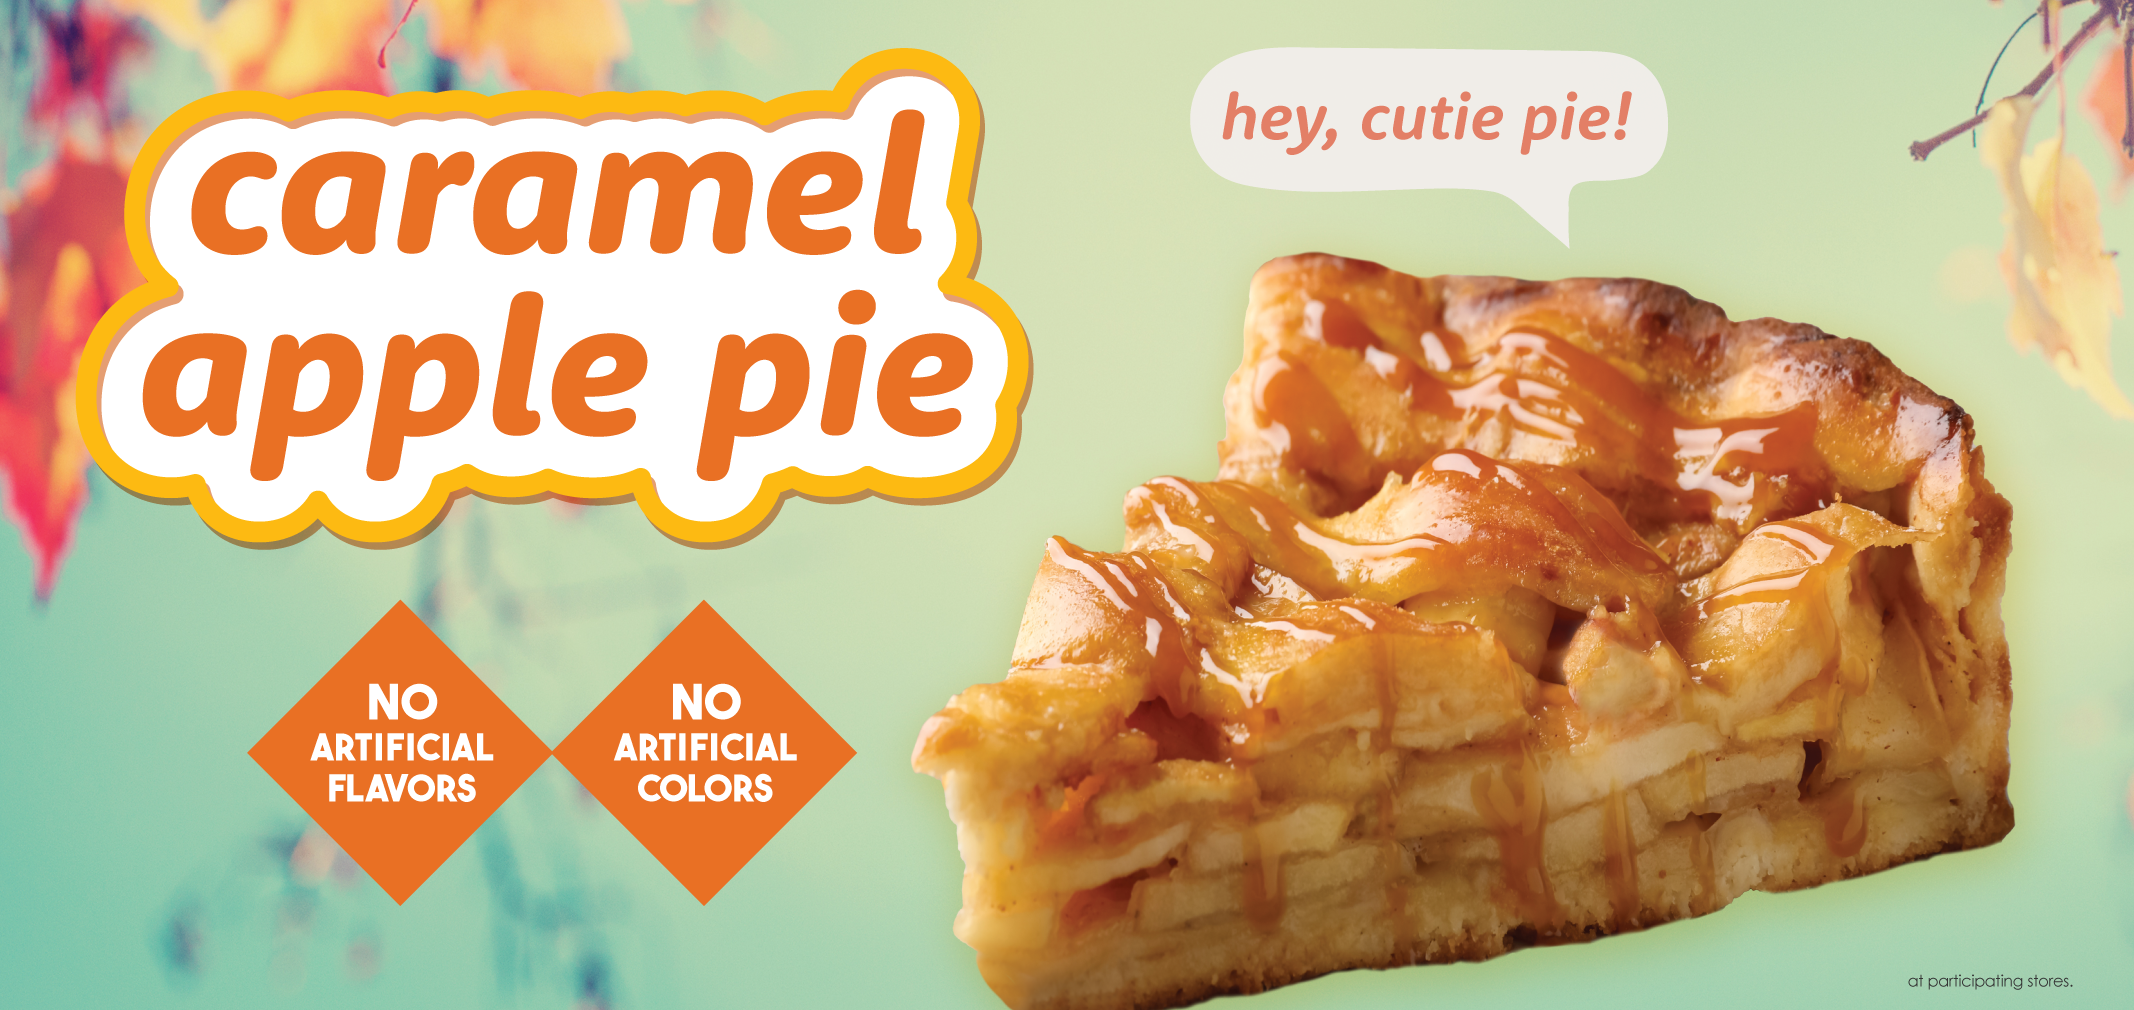 Caramel Apple Pie label image